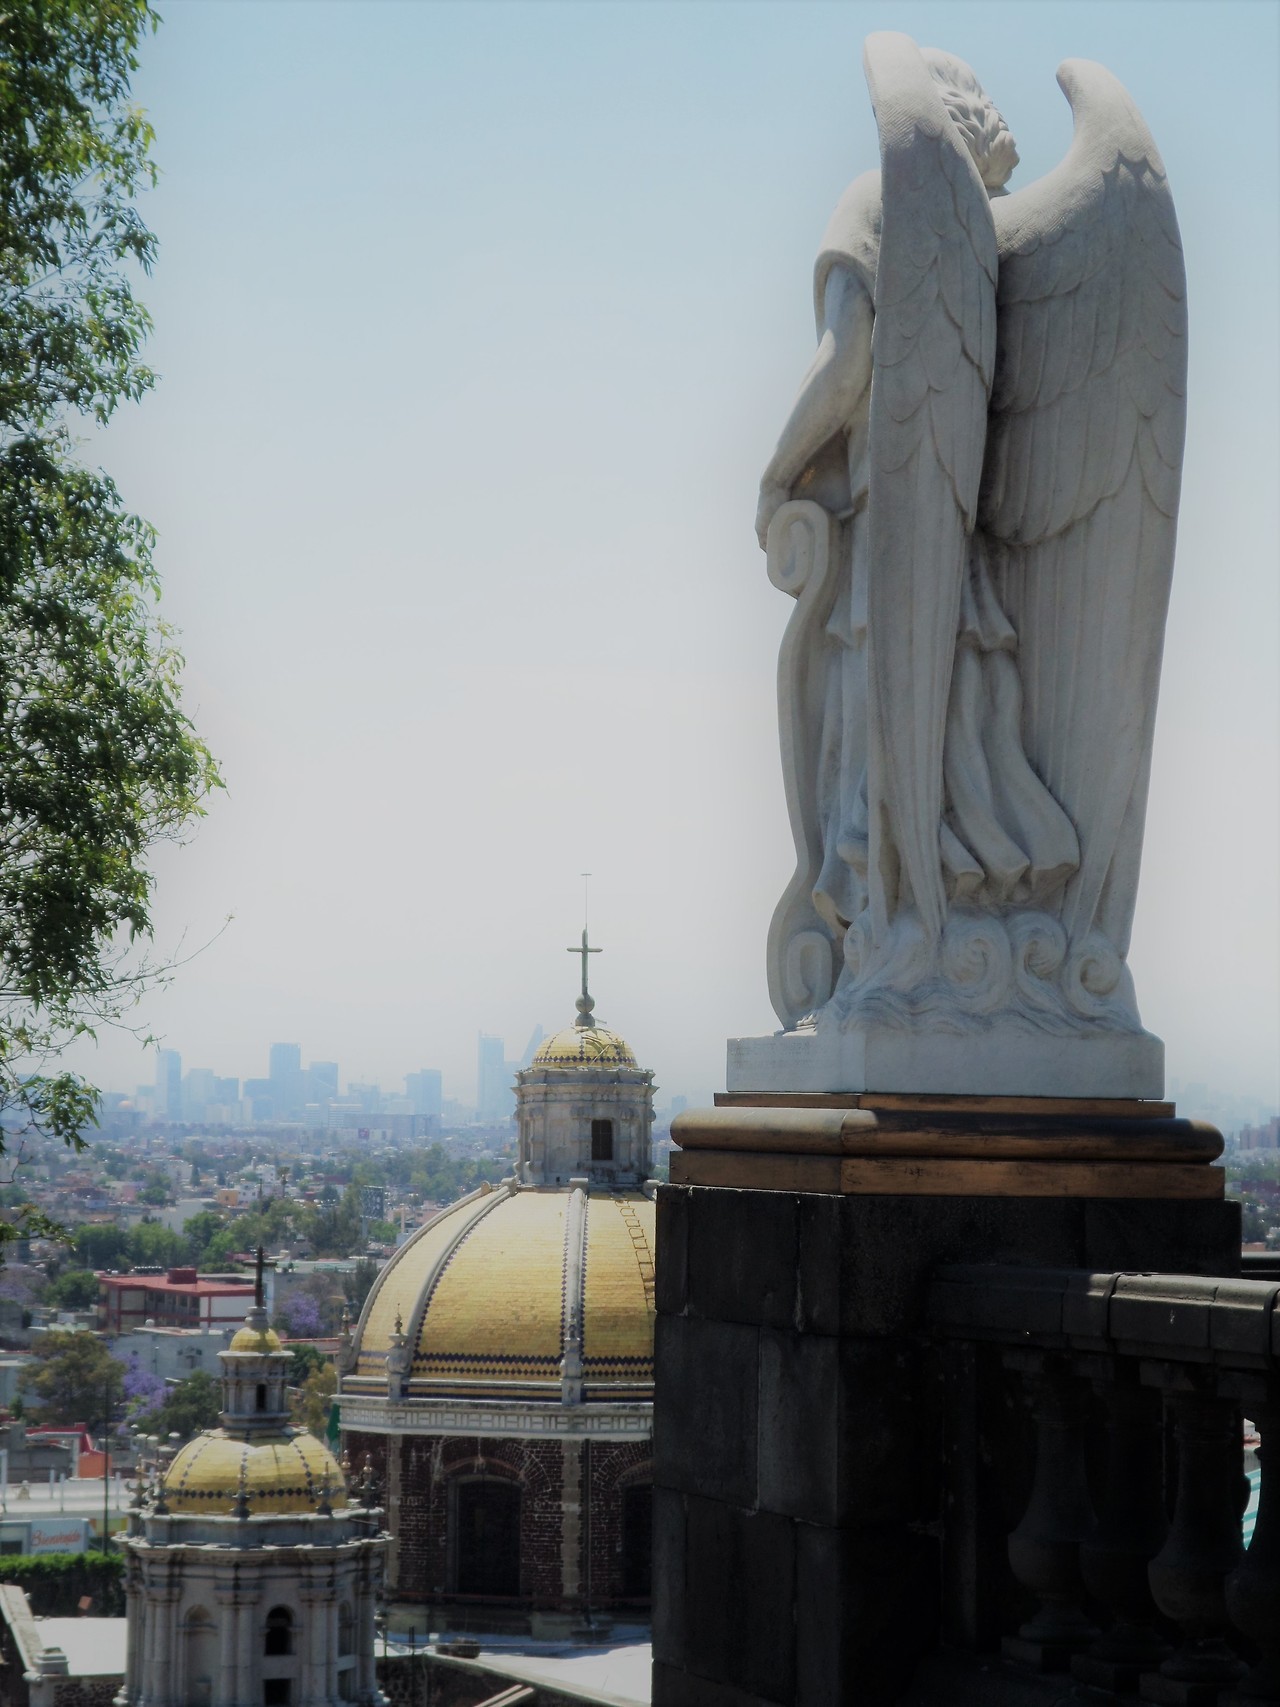 Basílica de Guadalupe, Mexico City.
Photo: @dreamerparadise12